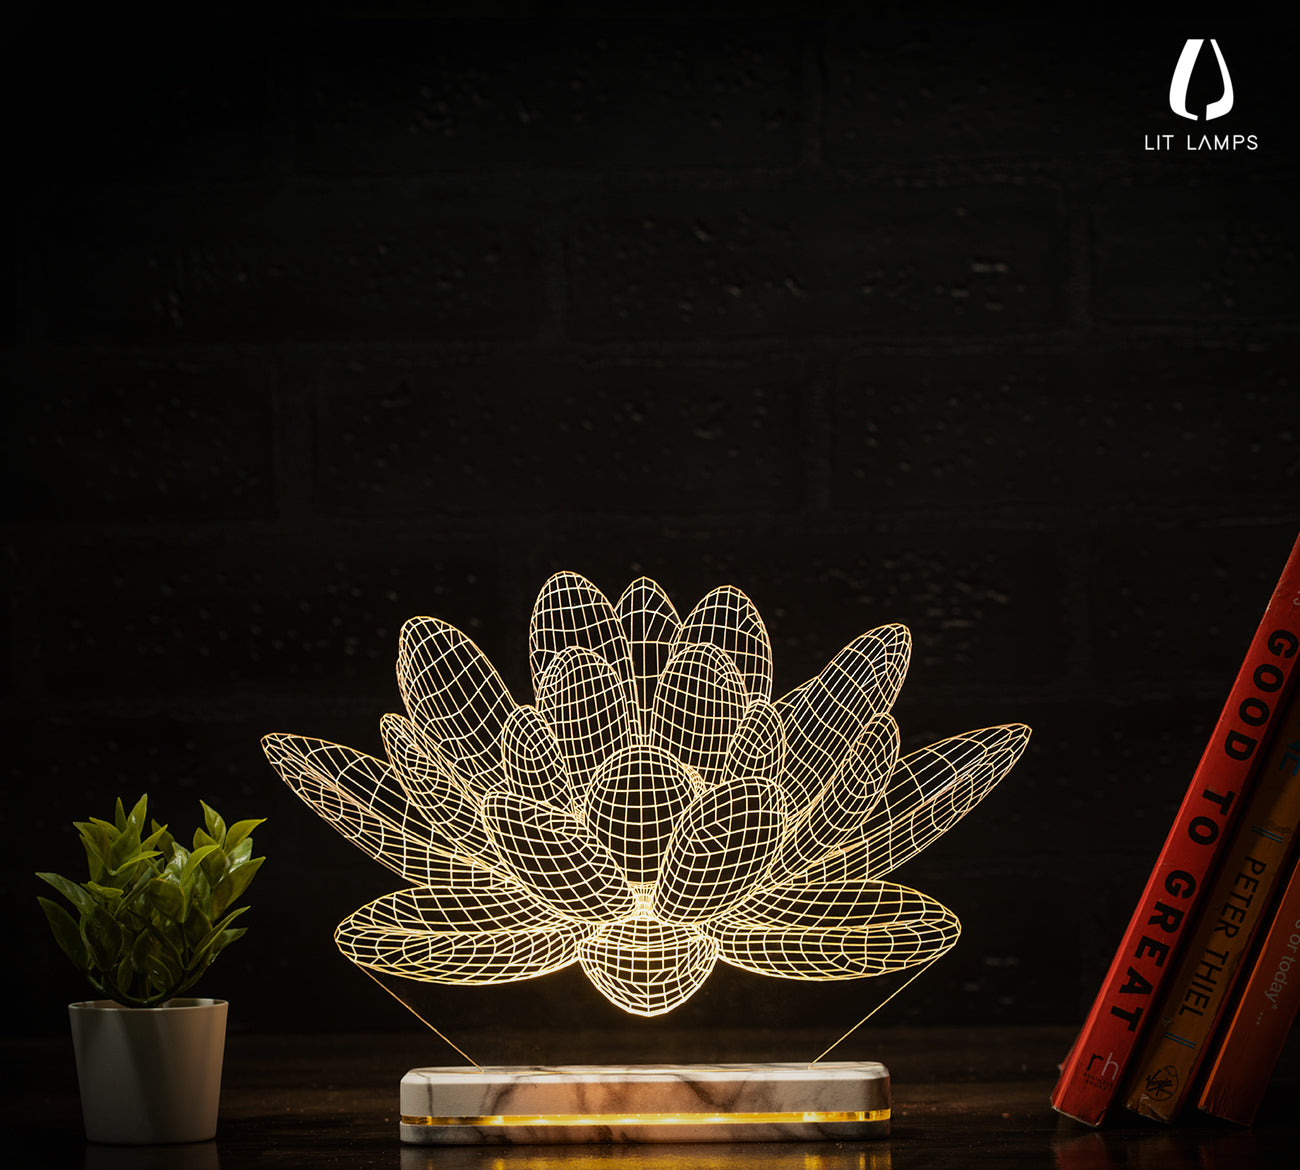 Lotus Modern Home Decor Aesthetic Table LIT 3D Illusion Lamp - LIT Lamps - Lotus 3D LED Lamp-3d Lamps